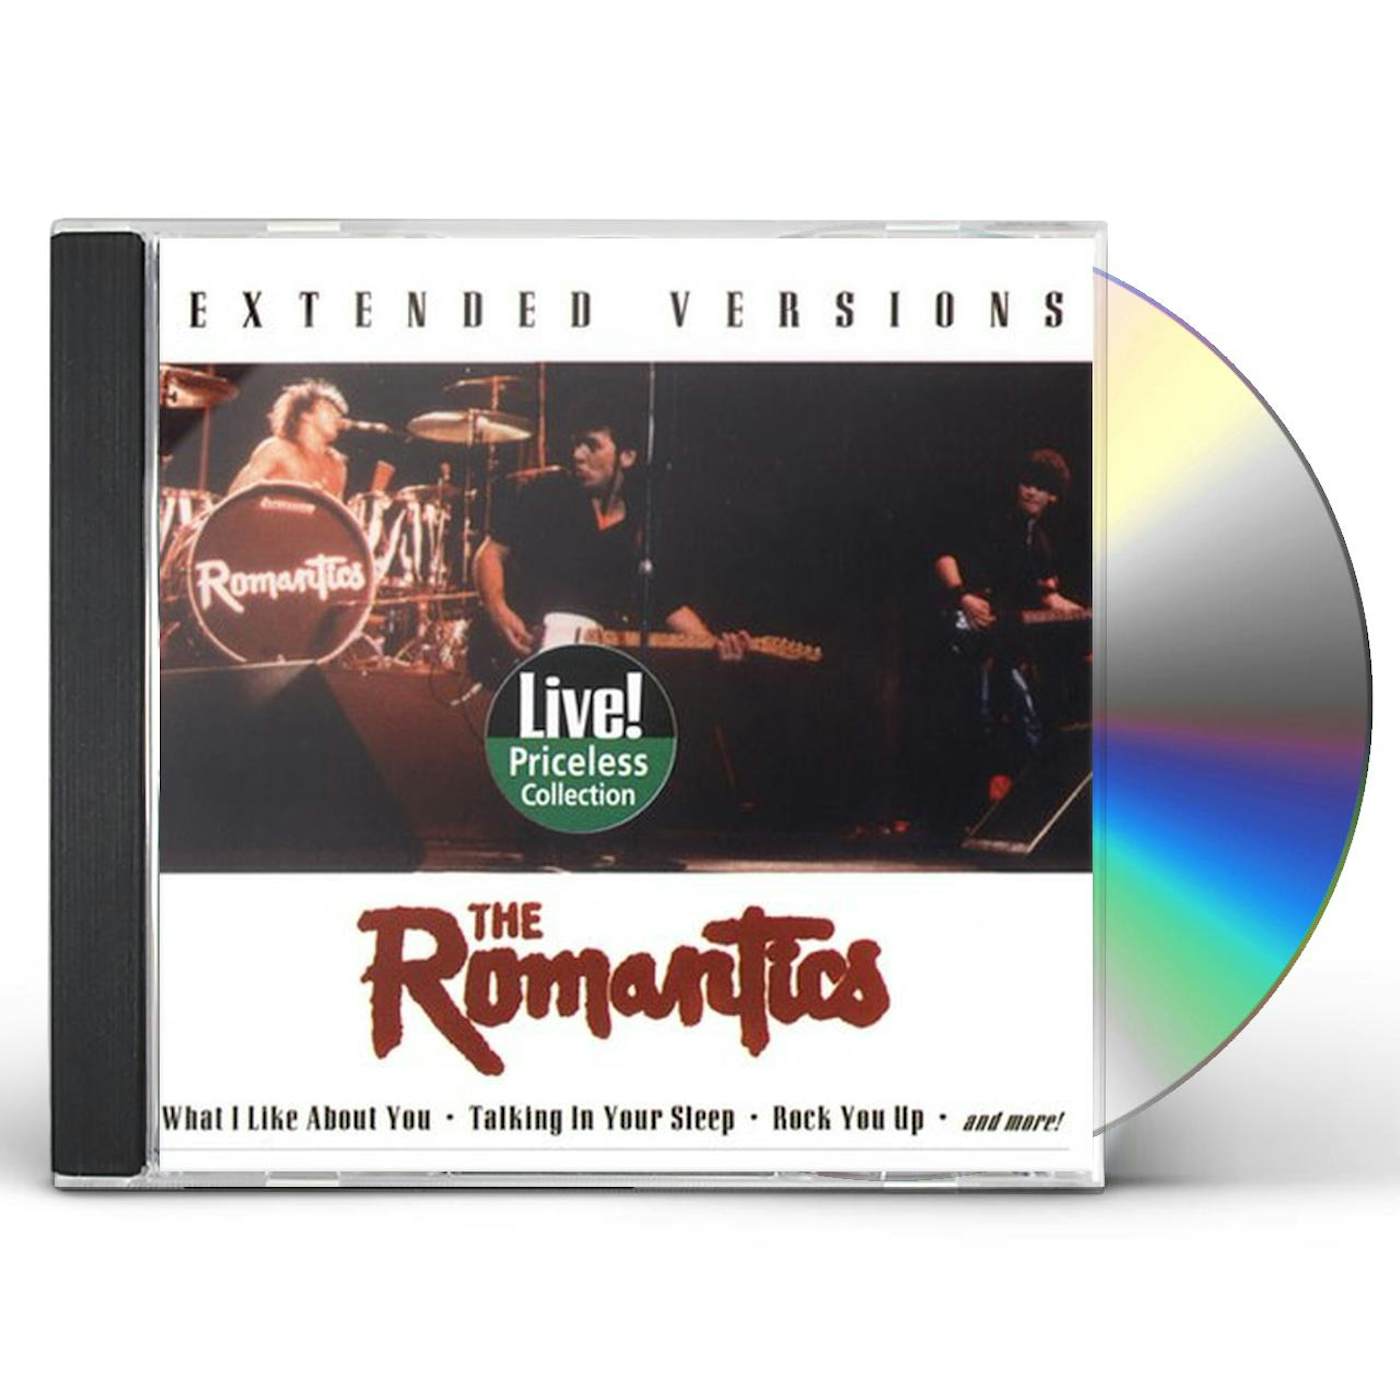 The Romantics EXTENDED VERSIONS CD